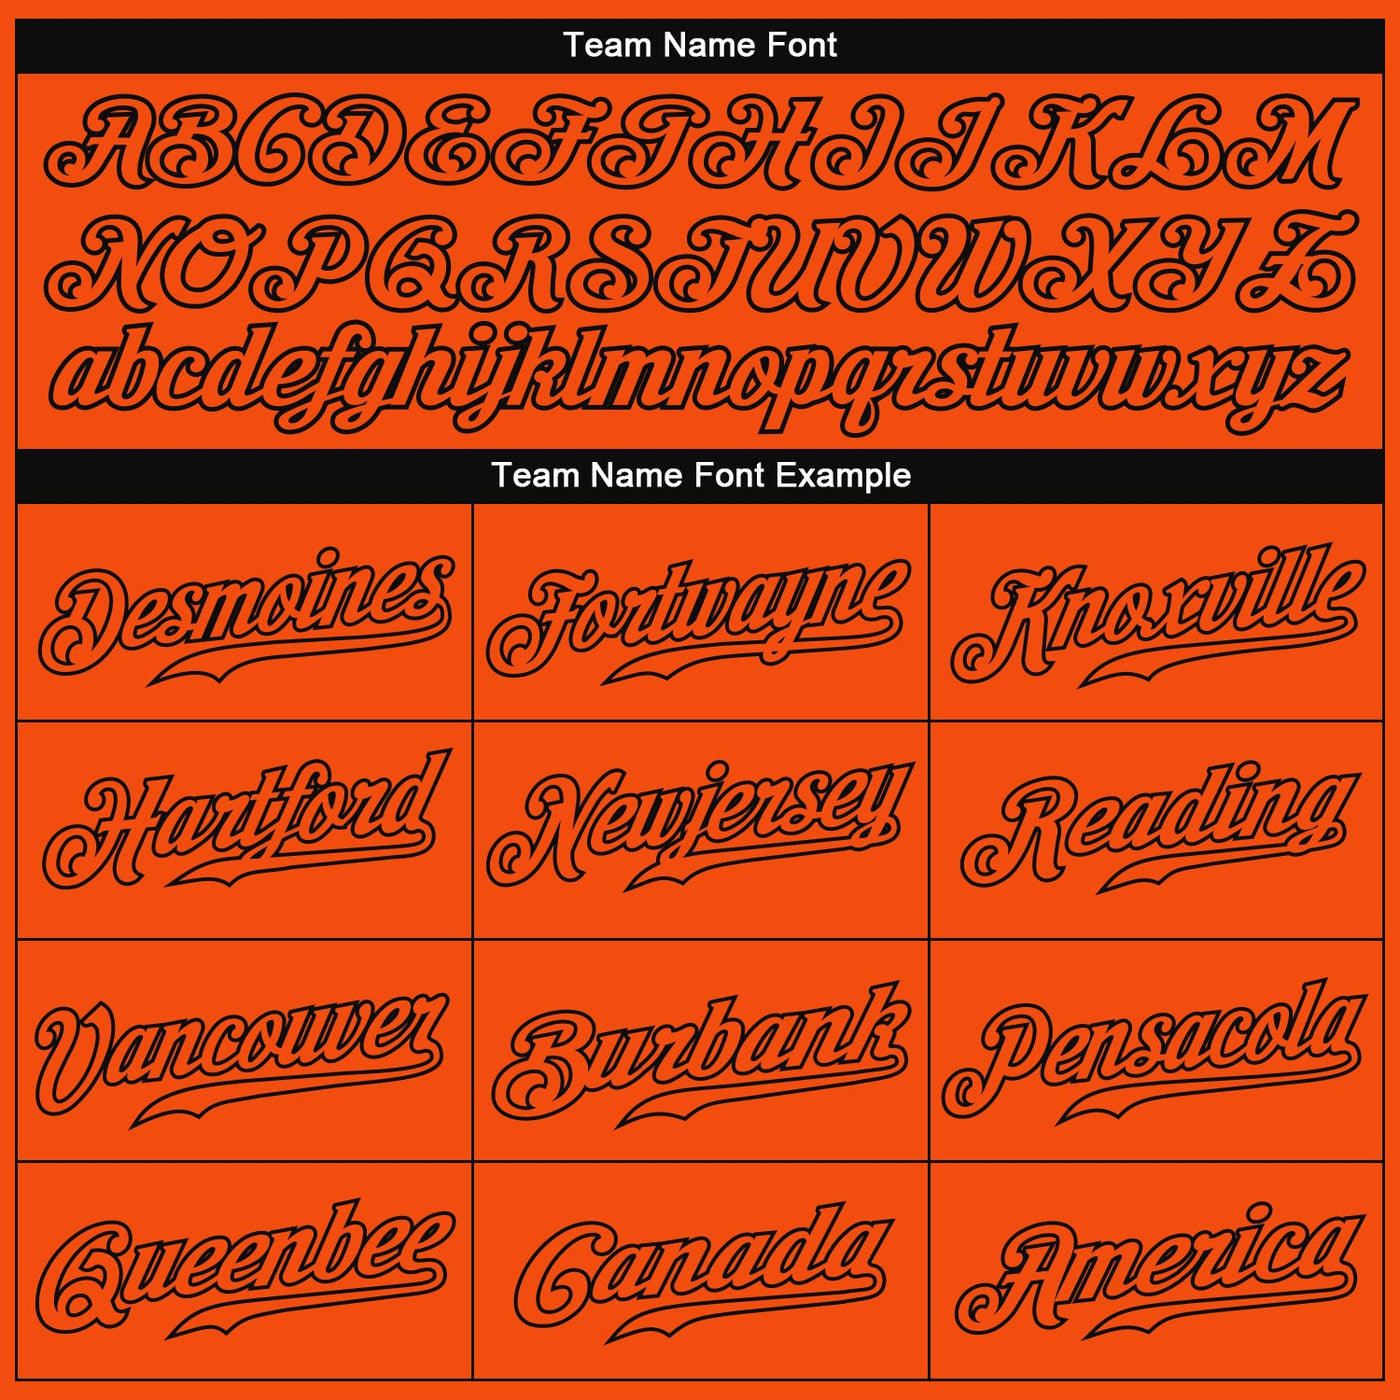 Custom Orange Orange-Black Authentic Baseball Jersey - Owls Matrix LTD